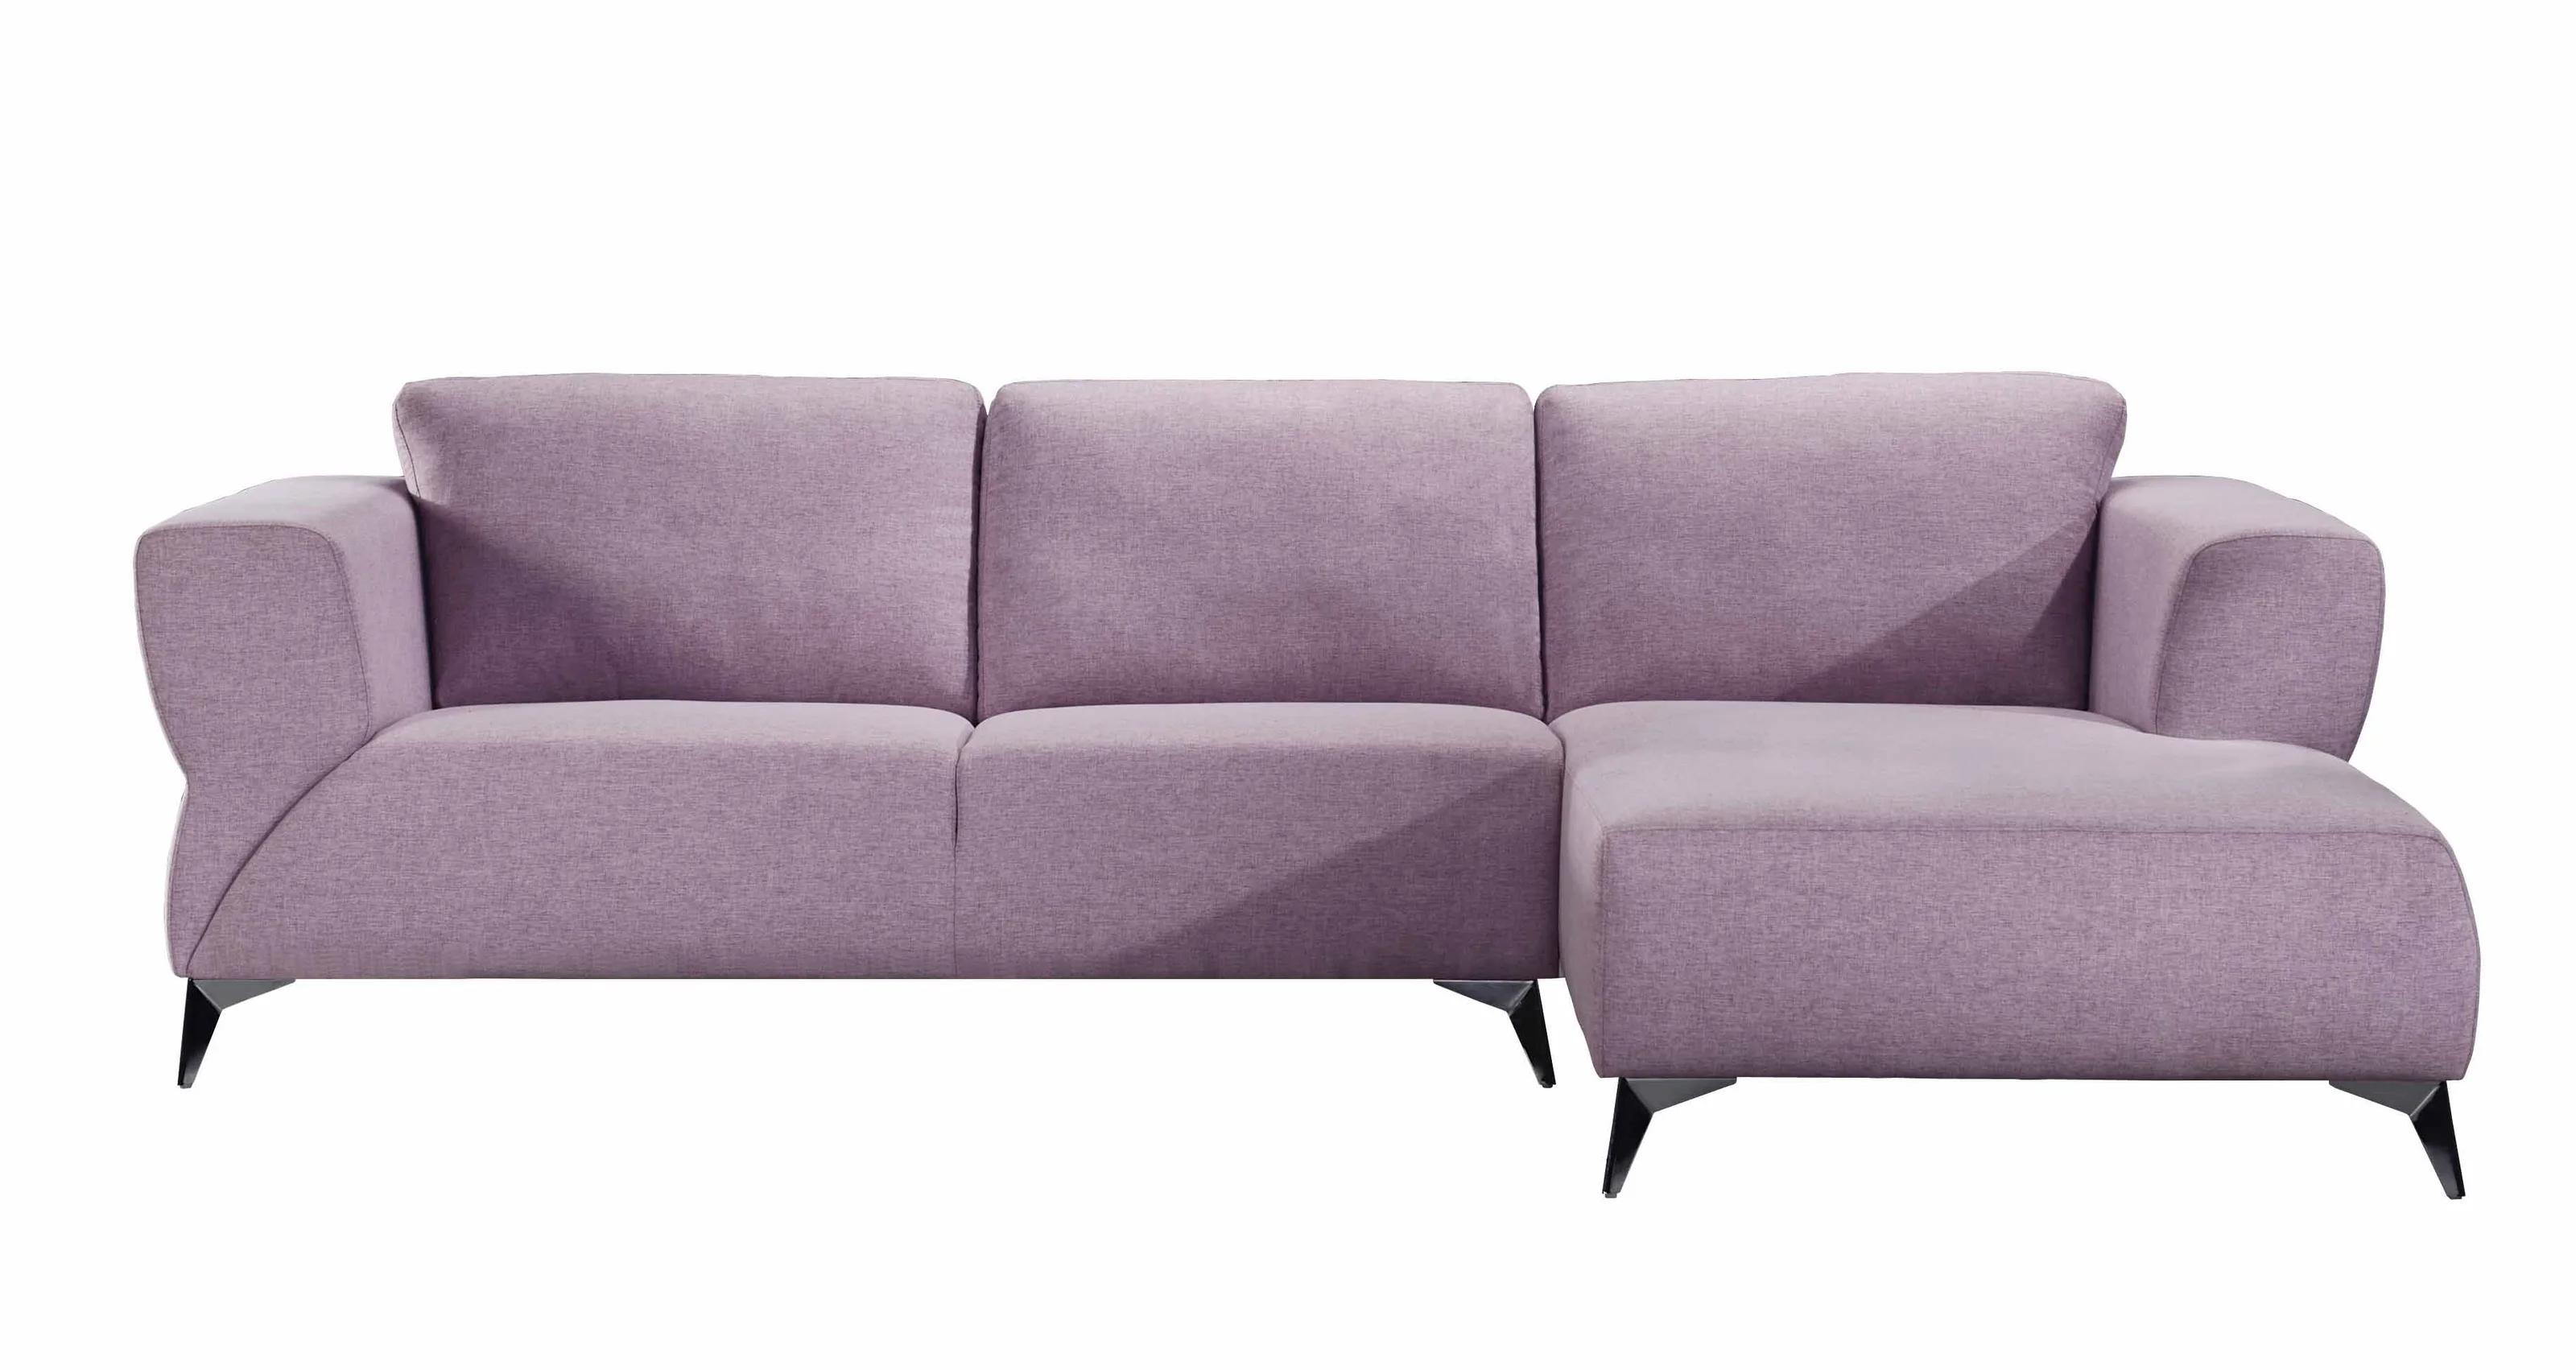 Modern, Simple Sectional Sofa Josiah 55090-2pcs in Purple Fabric